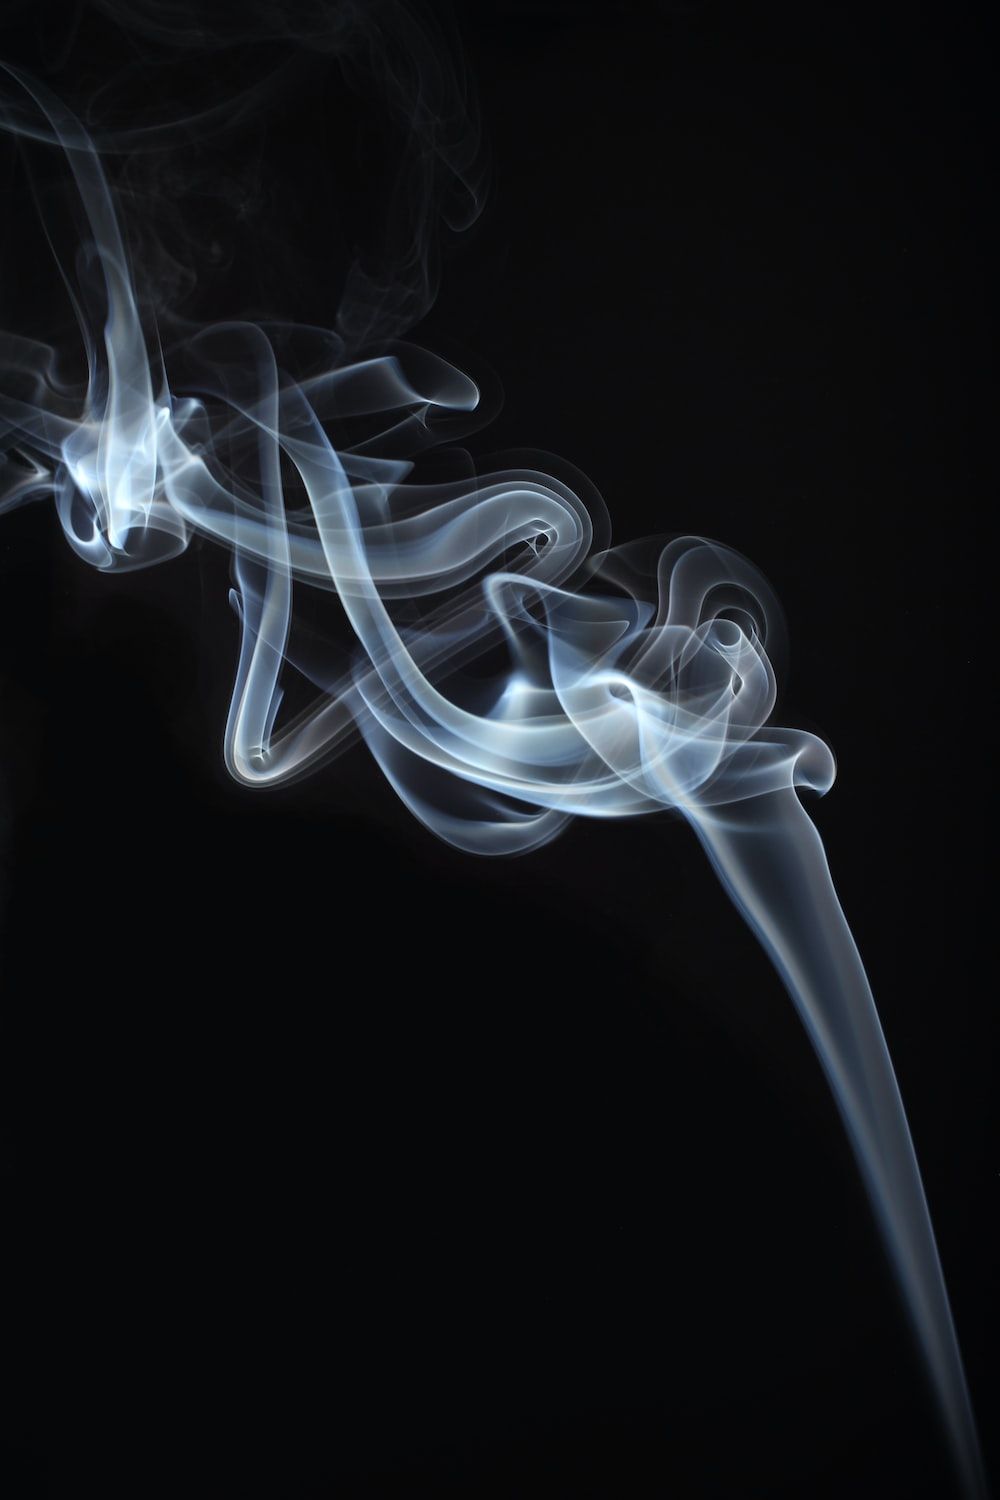 A black and white photograph of smoke - Smoke